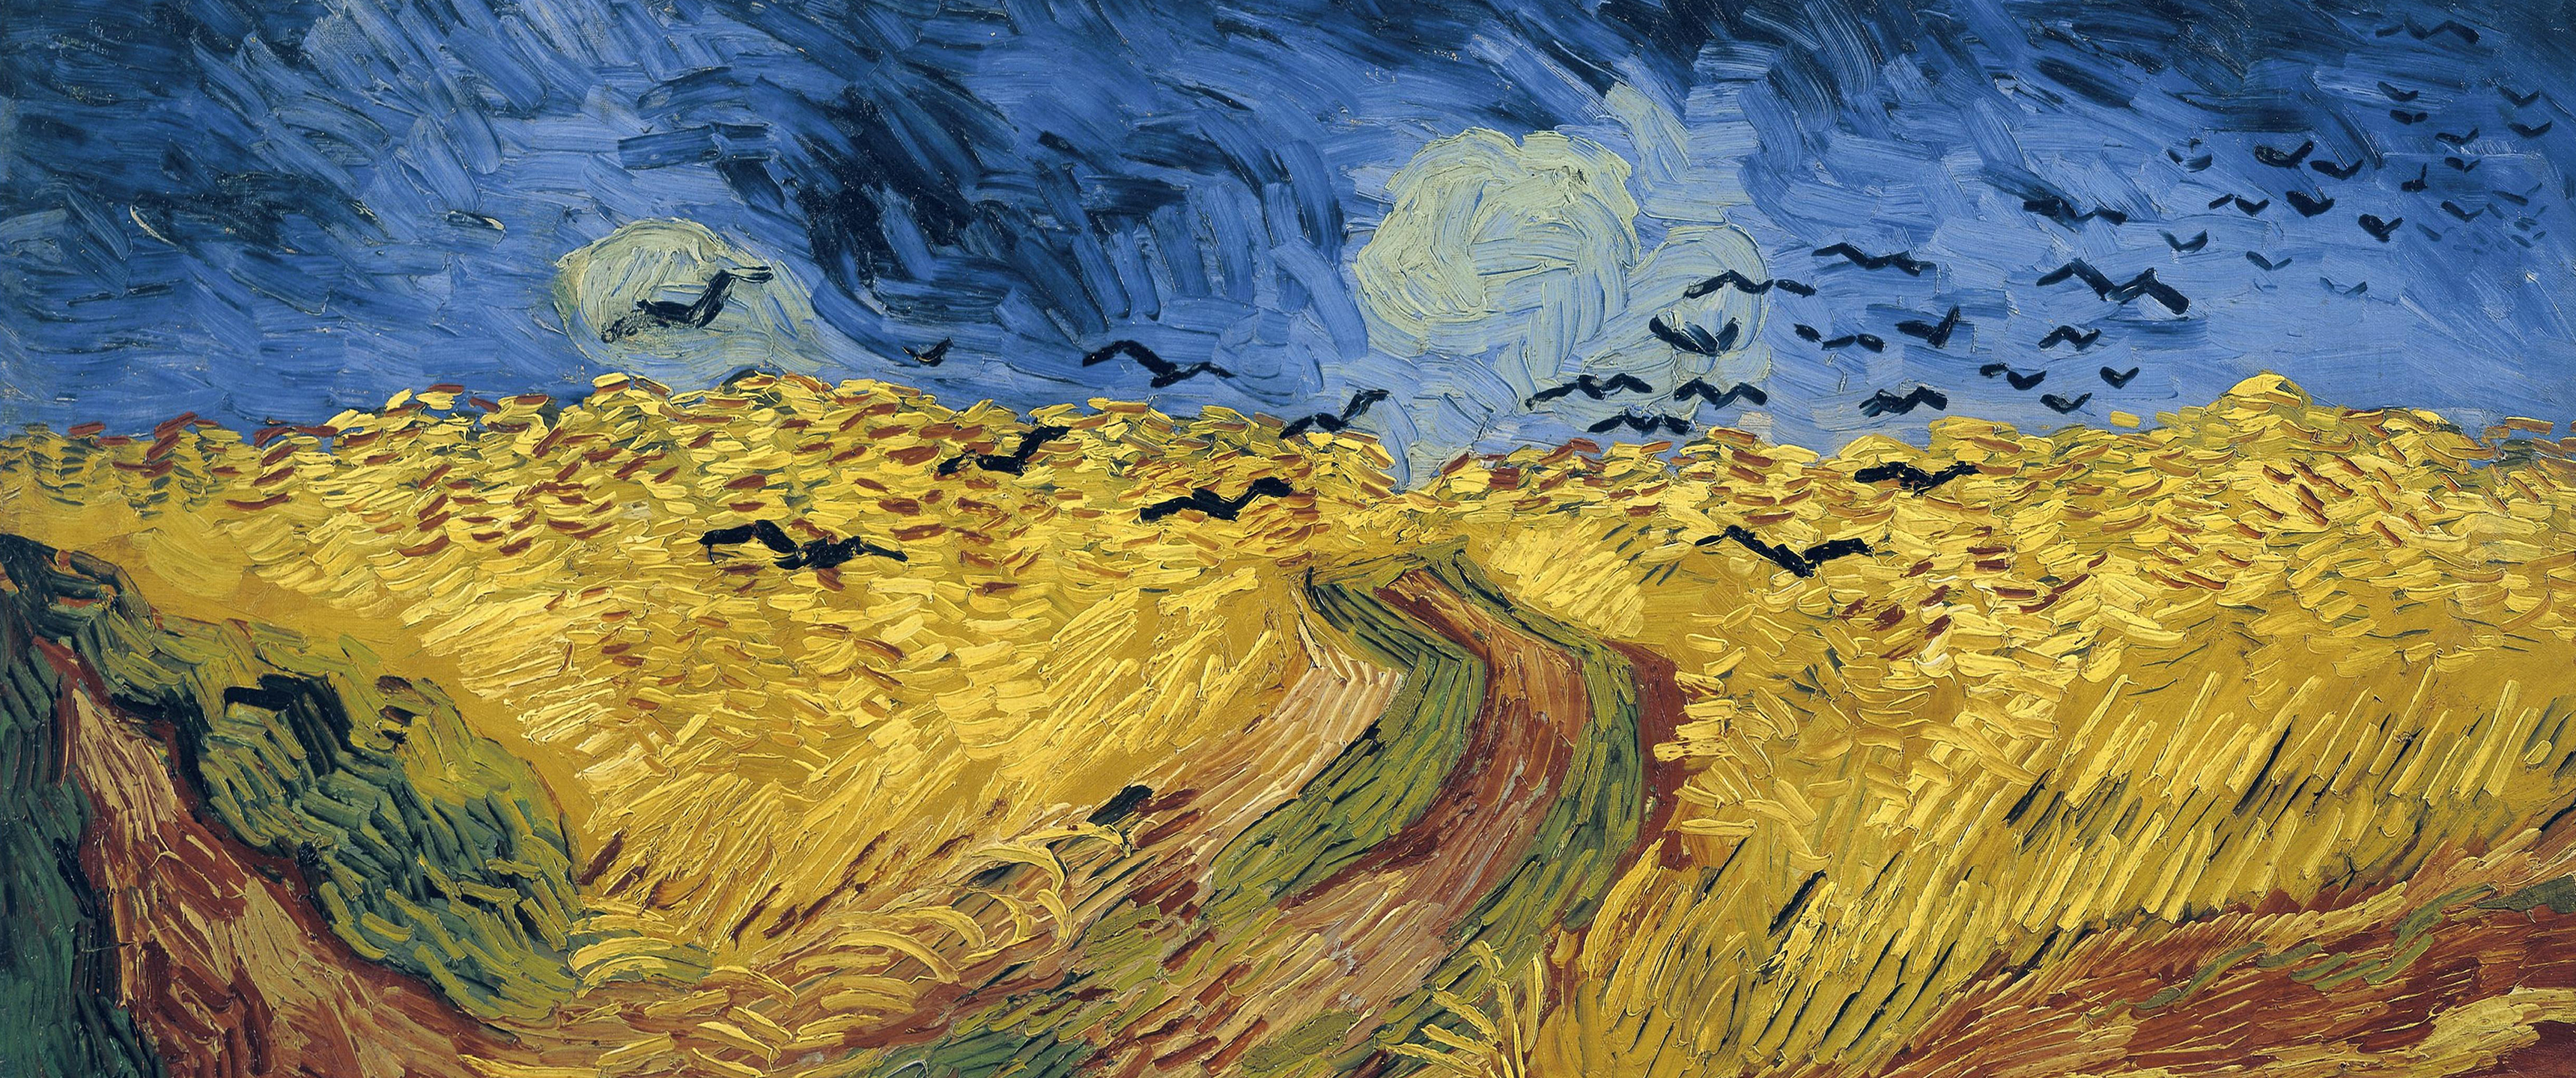 Ultra Wide Ultrawide Vincent Van Gogh Painting Impressionism 3440x1440